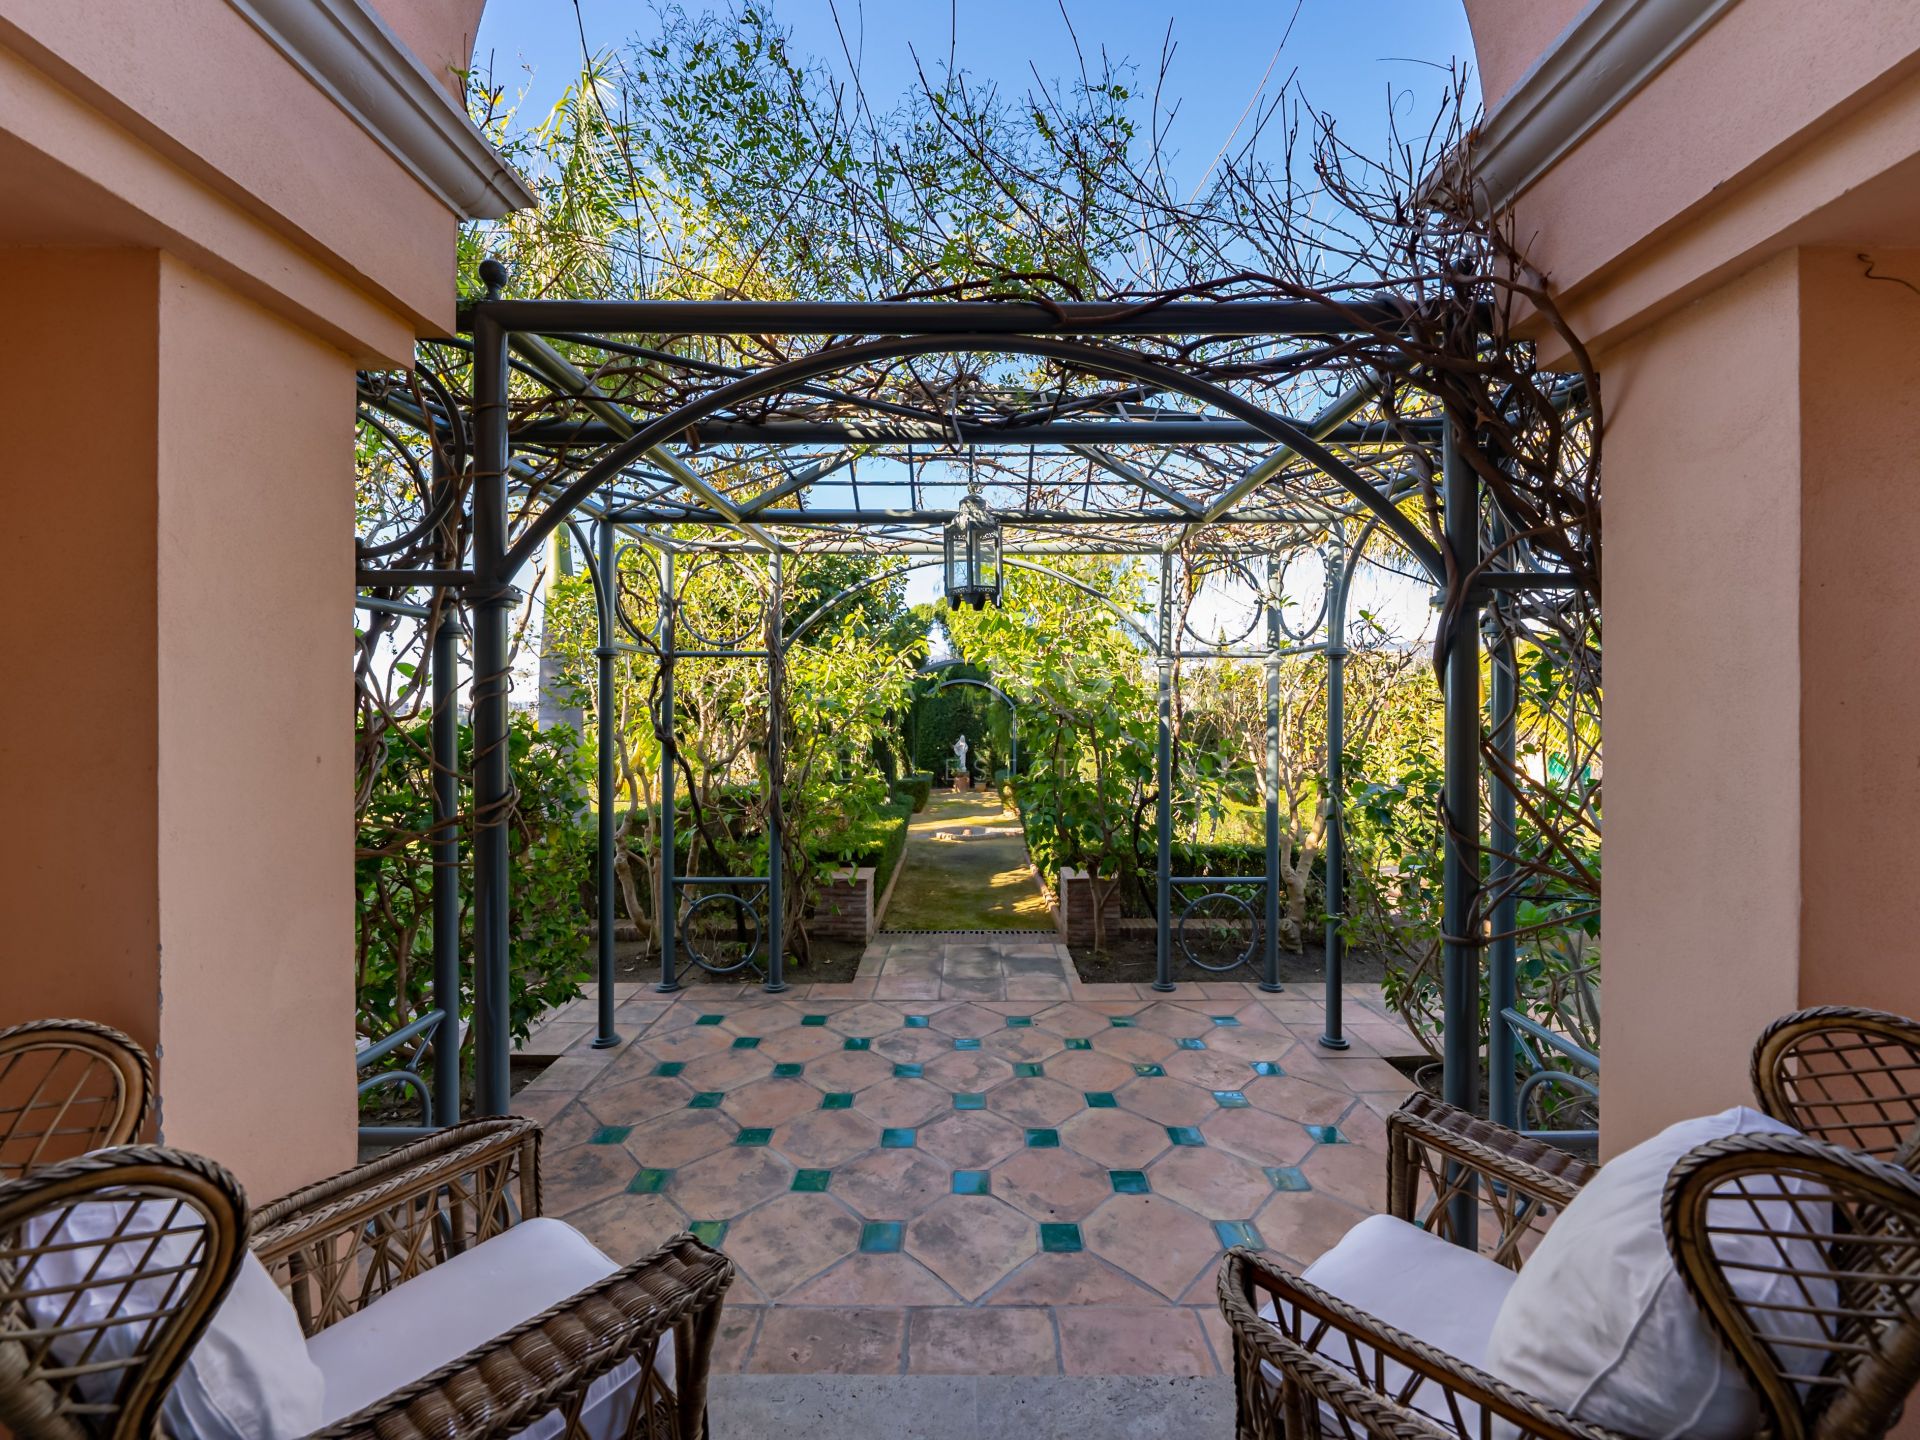 Stunning Mediterranean-Style villa in Los Flamingos, Benahavis